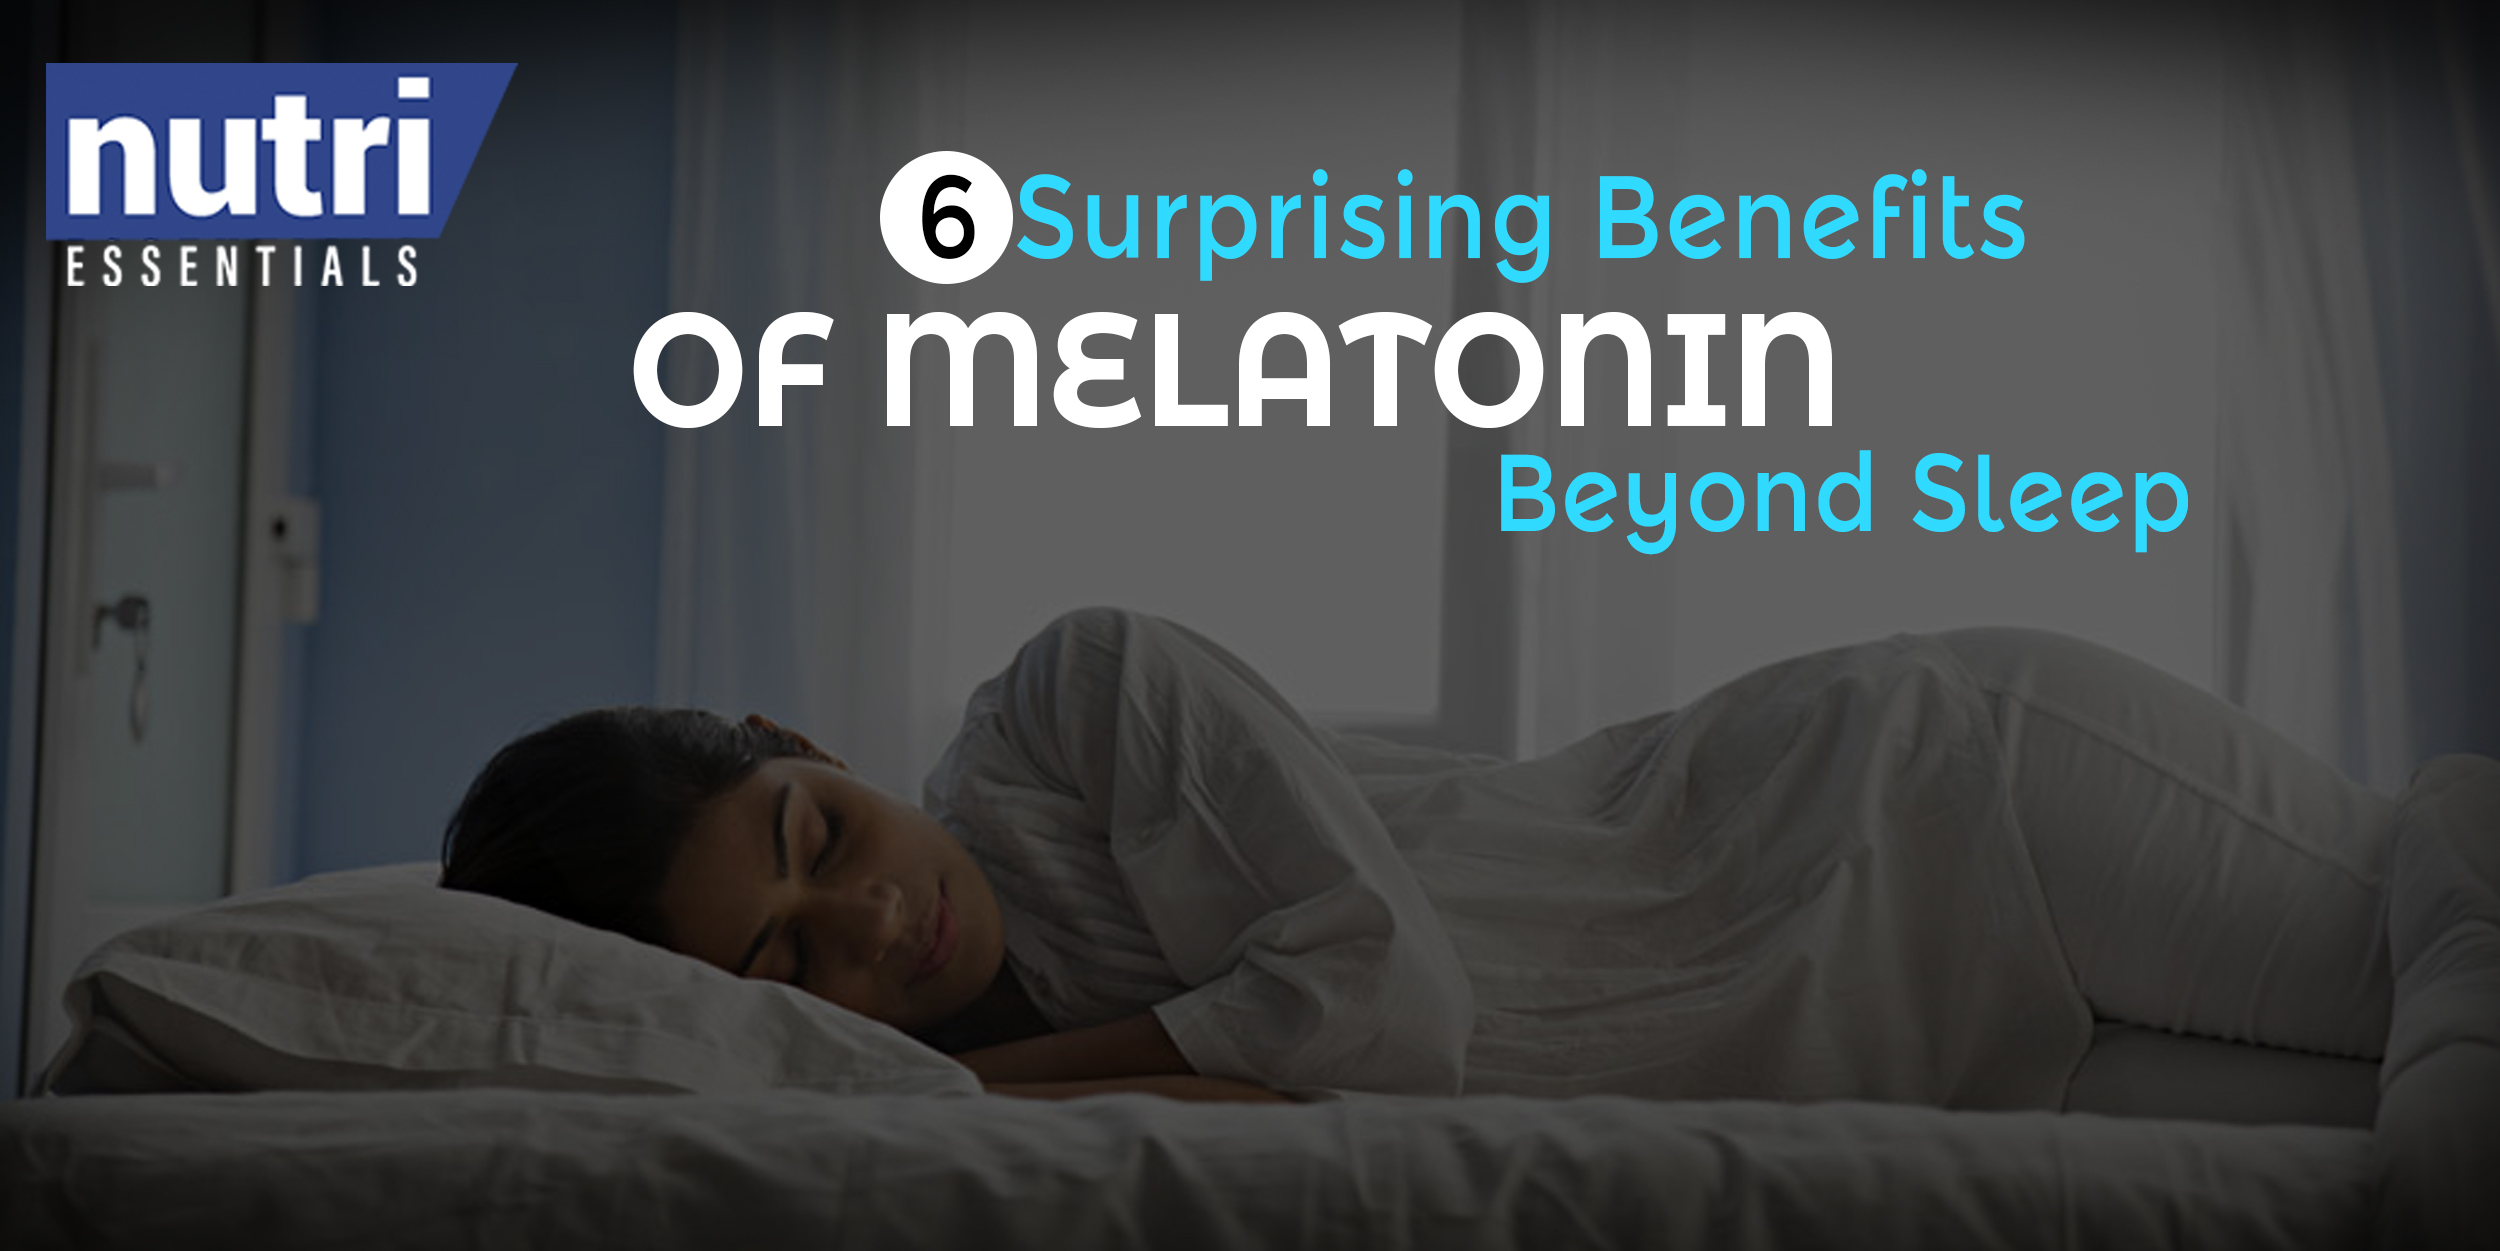 6 SURPRISING BENEFITS OF MELATONIN BEYOND SLEEP